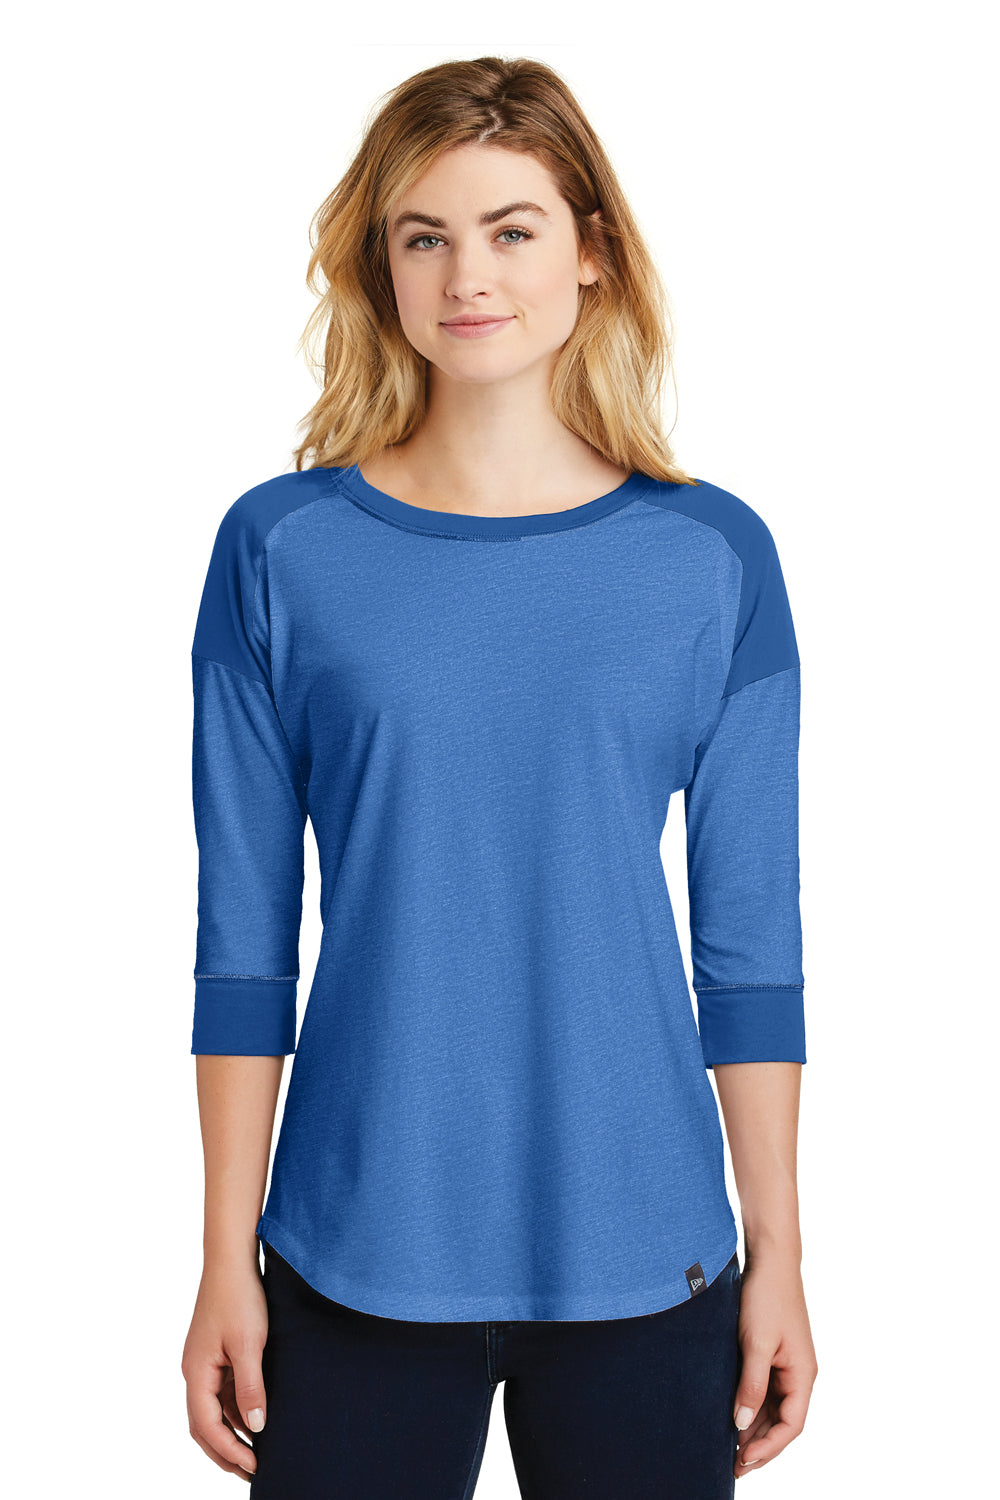 New Era LNEA104 Womens Heritage 3/4 Sleeve Crewneck T-Shirt Royal Blue/Heather Royal Blue Front